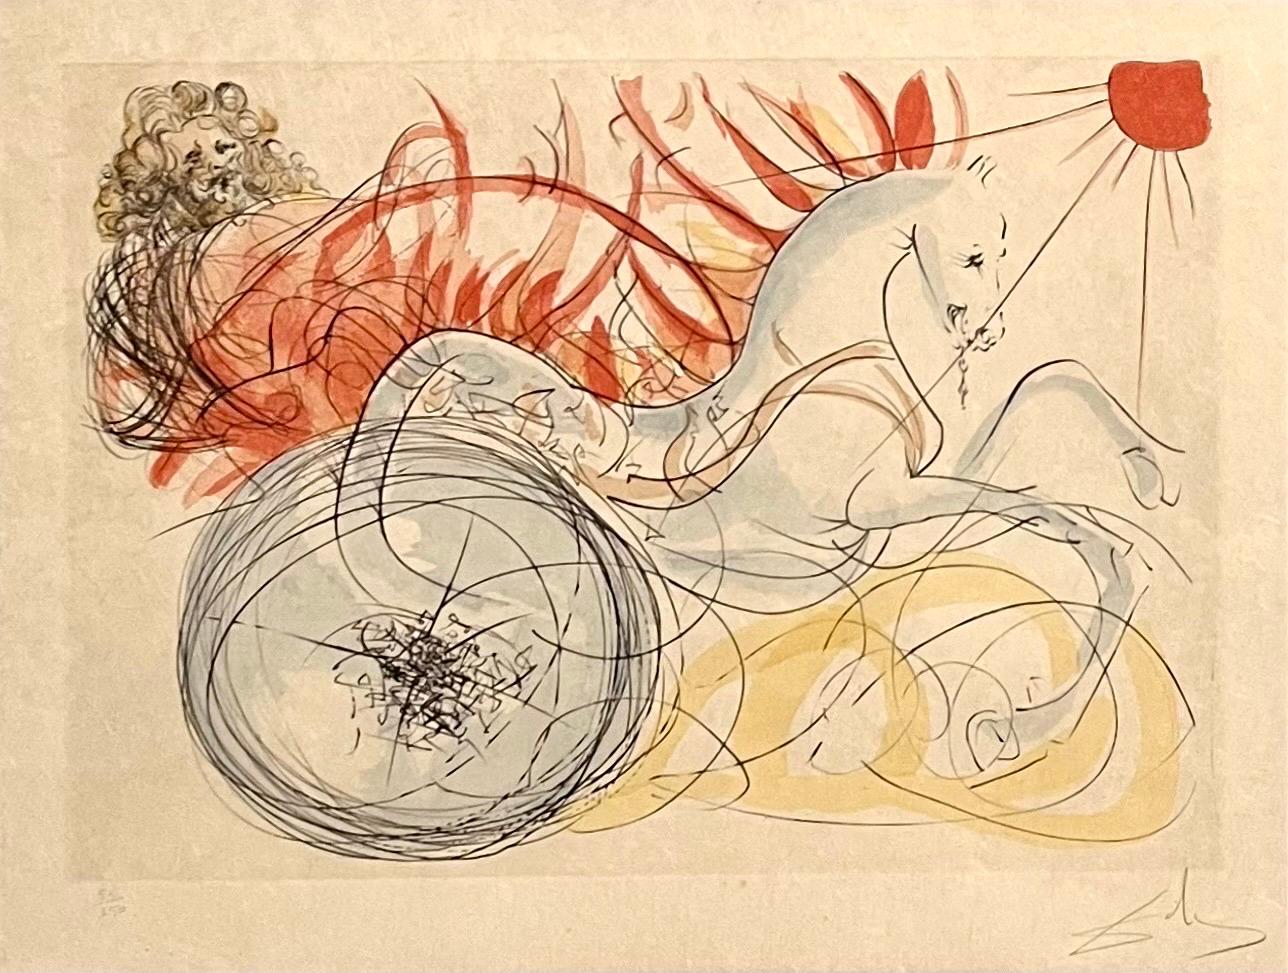 Animal Print Salvador Dalí - Surrealist Salvador Dali Large Pochoir Etching Drypoint Lithograph Chariot Rider